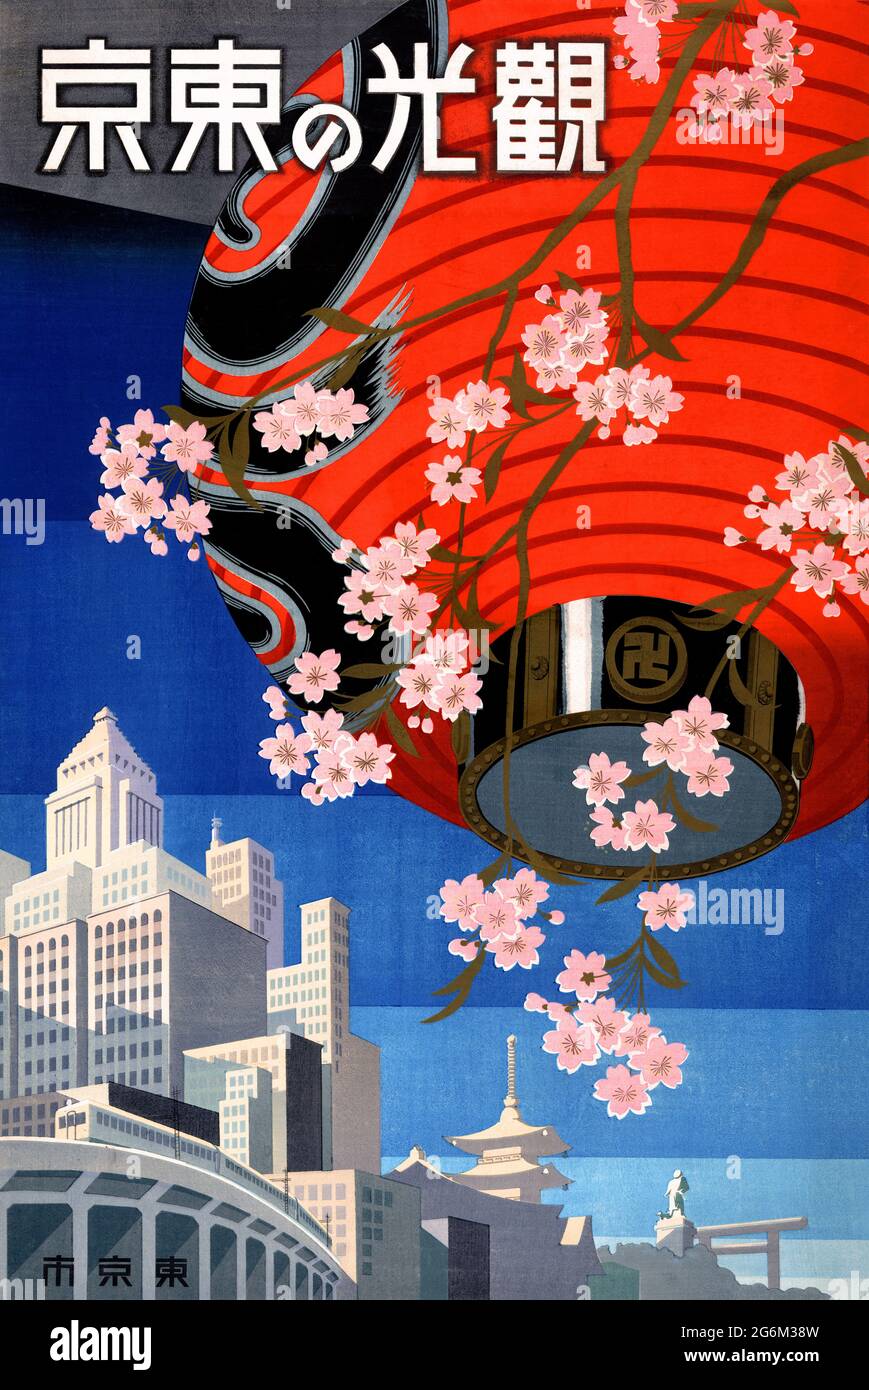 Kankō no Tokyo. Artist unknown. Restored vintage poster published in 1937 in Japan. Stock Photo